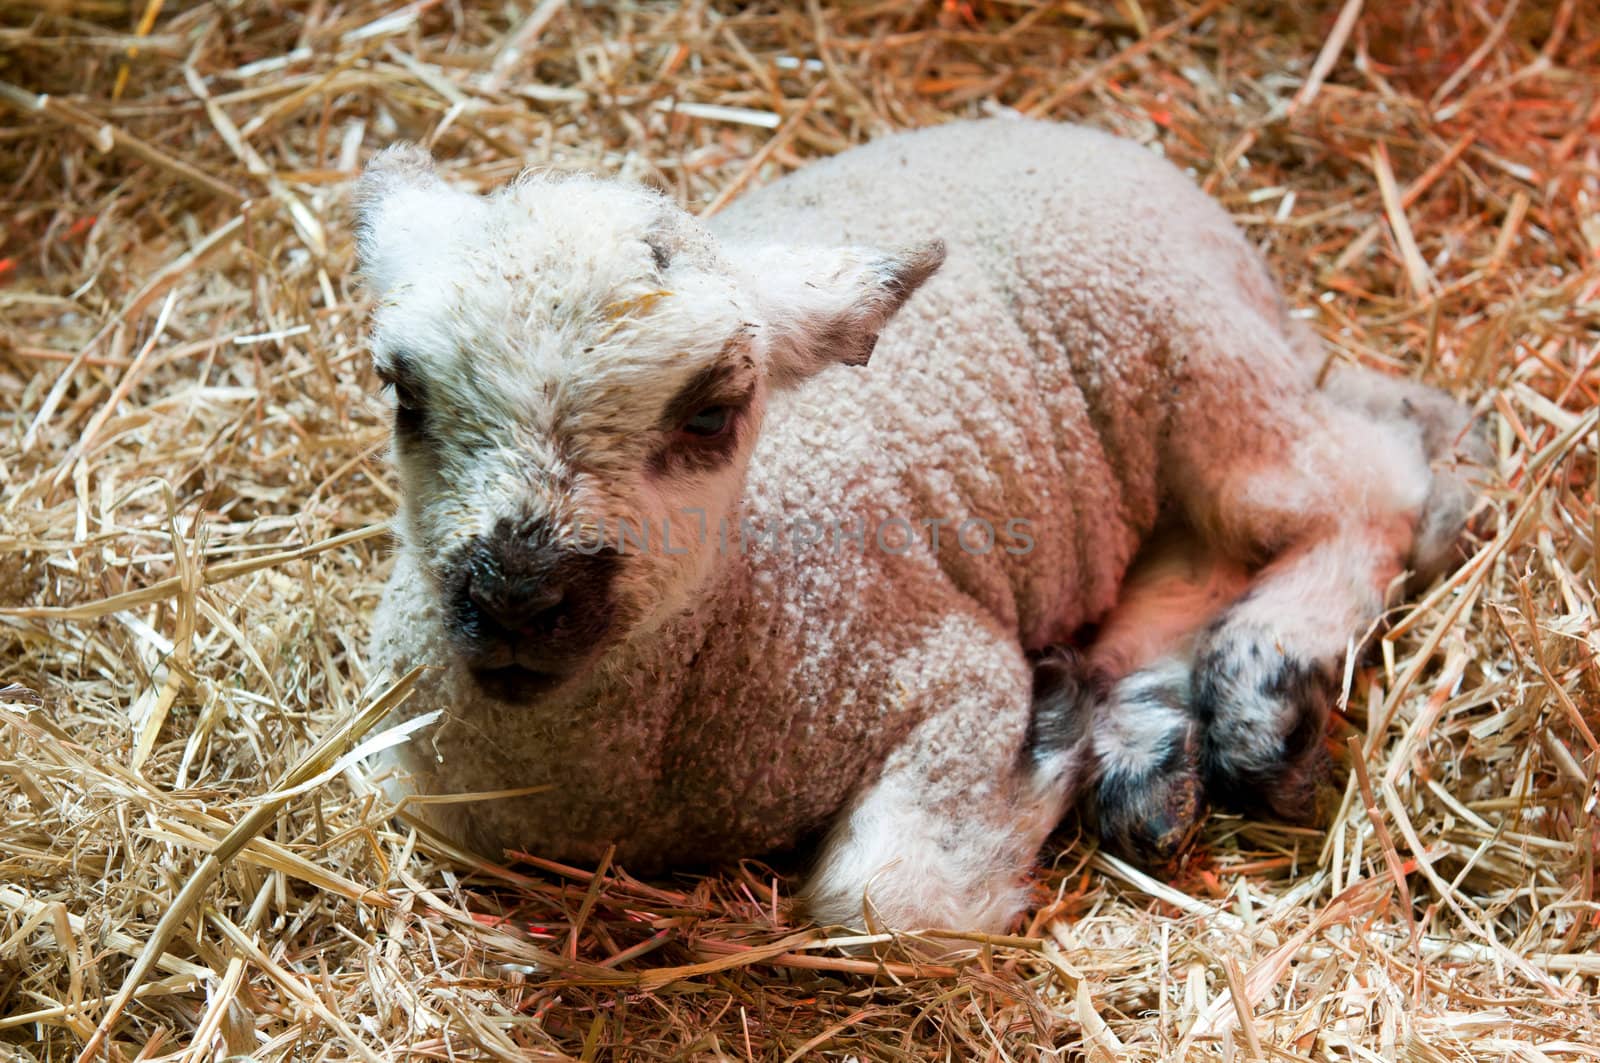 Newborn lamb by luissantos84